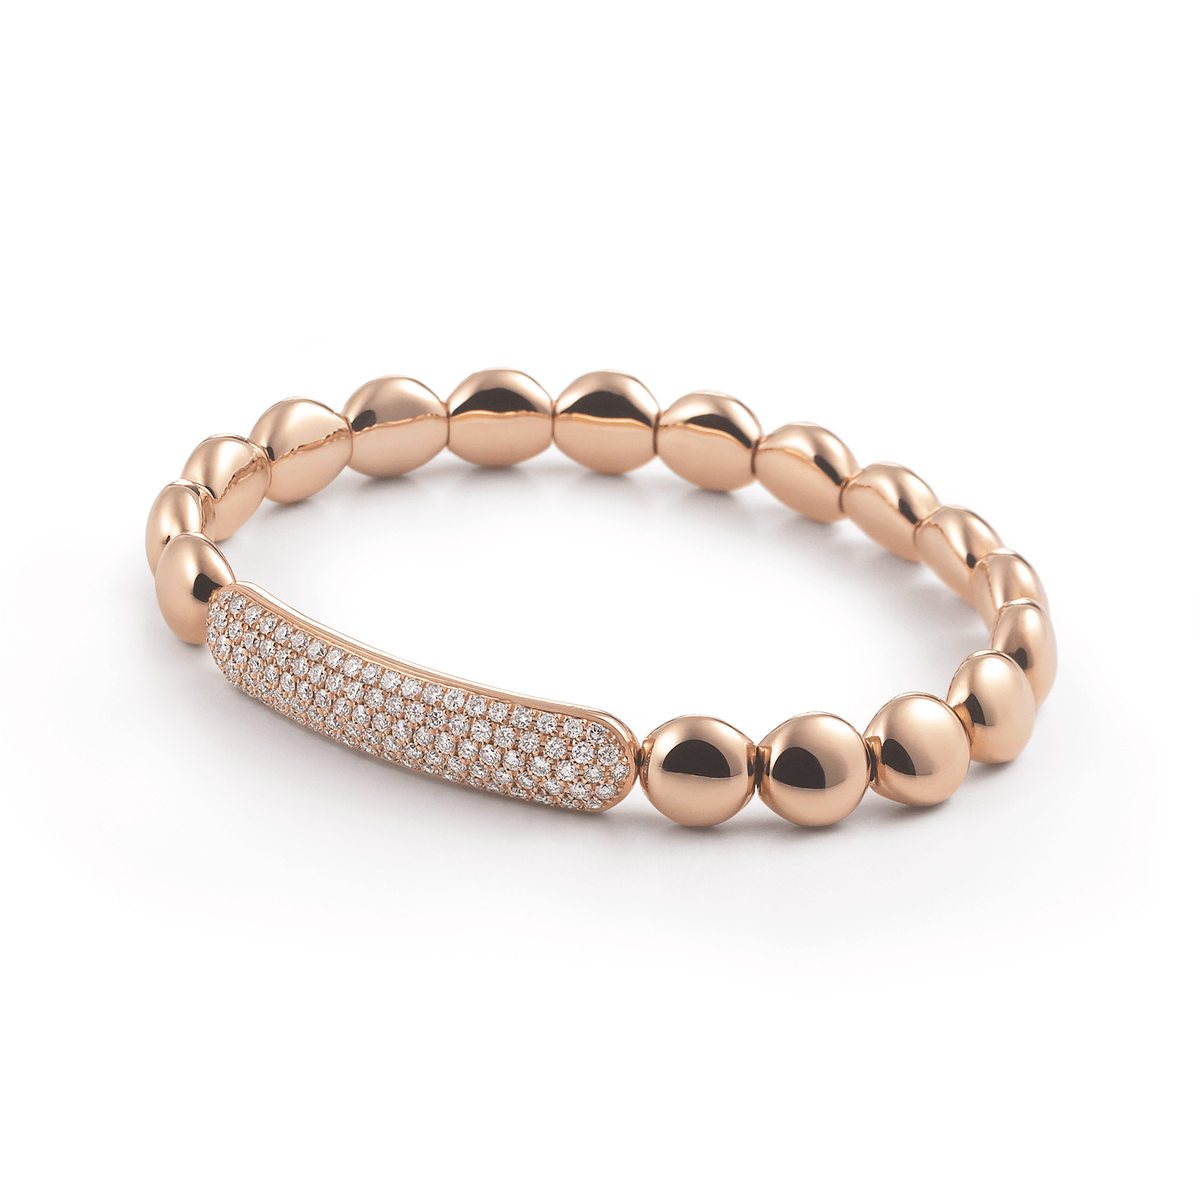 Al Coro Stretchy Bracelet in 18k Rose gold with 104 Diamonds - Orsini Jewellers NZ